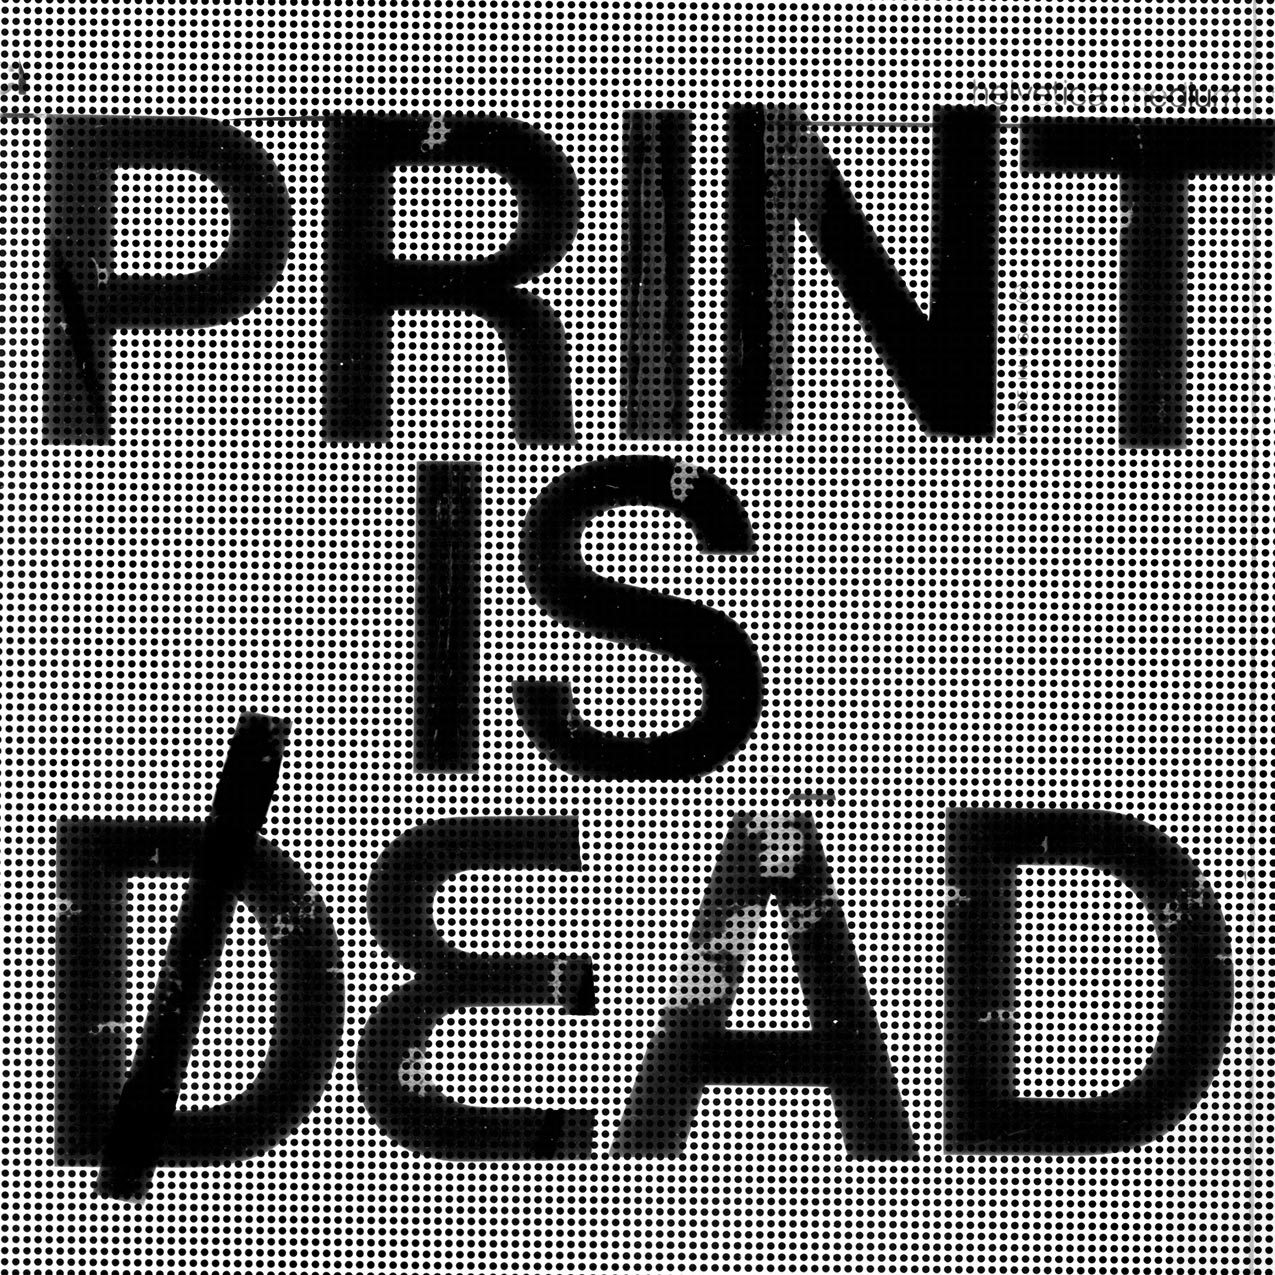 (Just kidding, print’s not dead!)